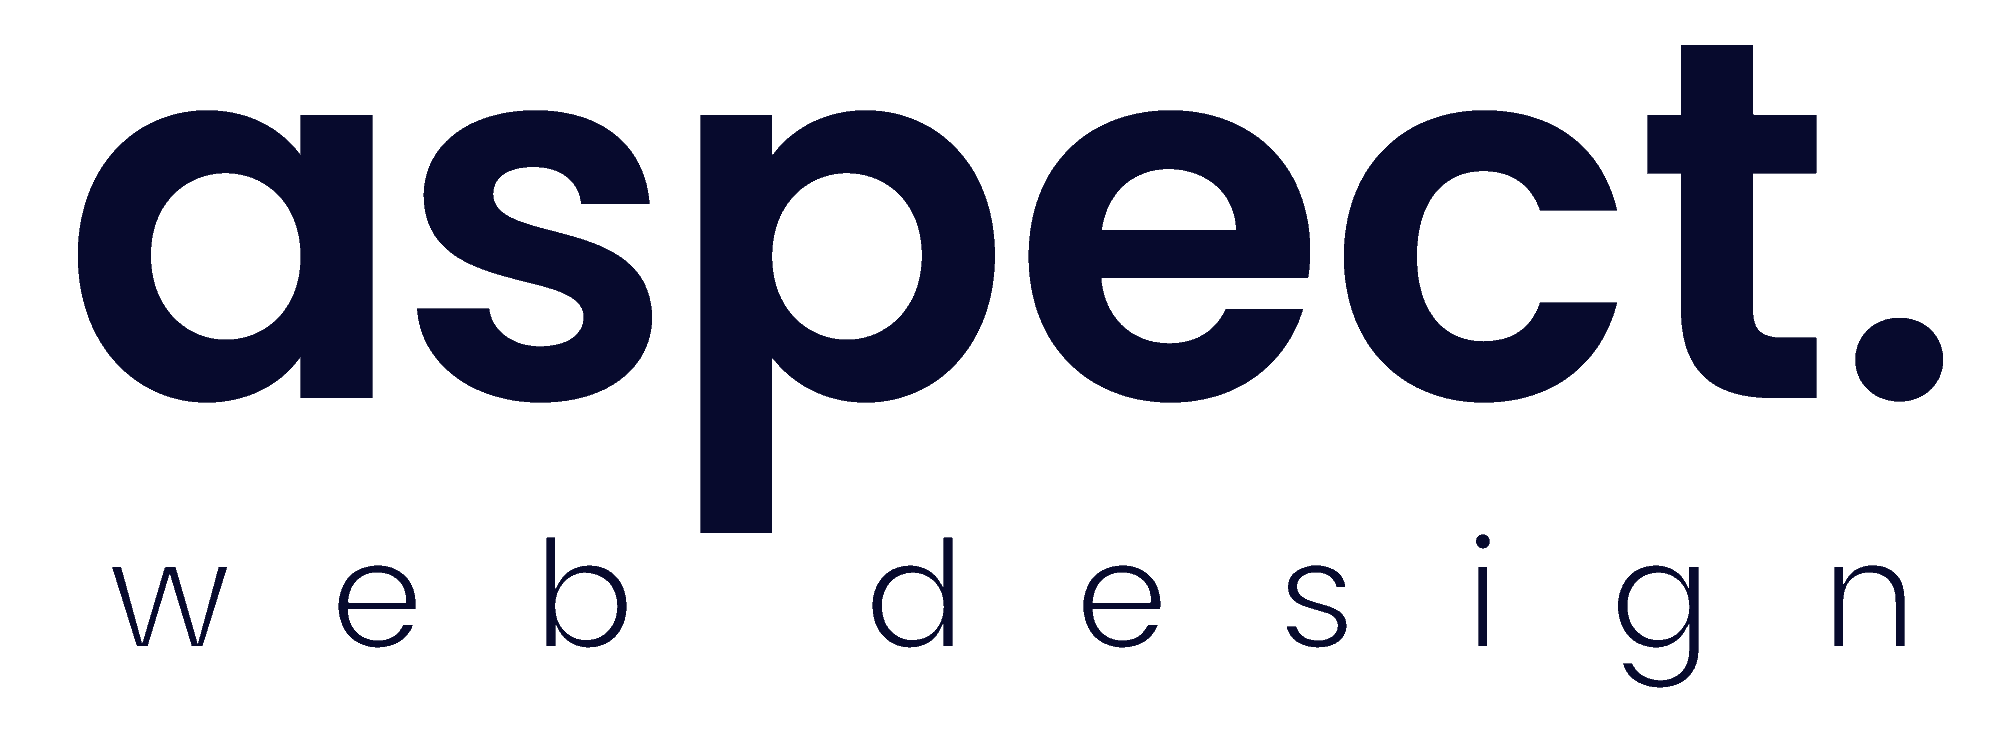 cropped aspect web design logo poppins light.png